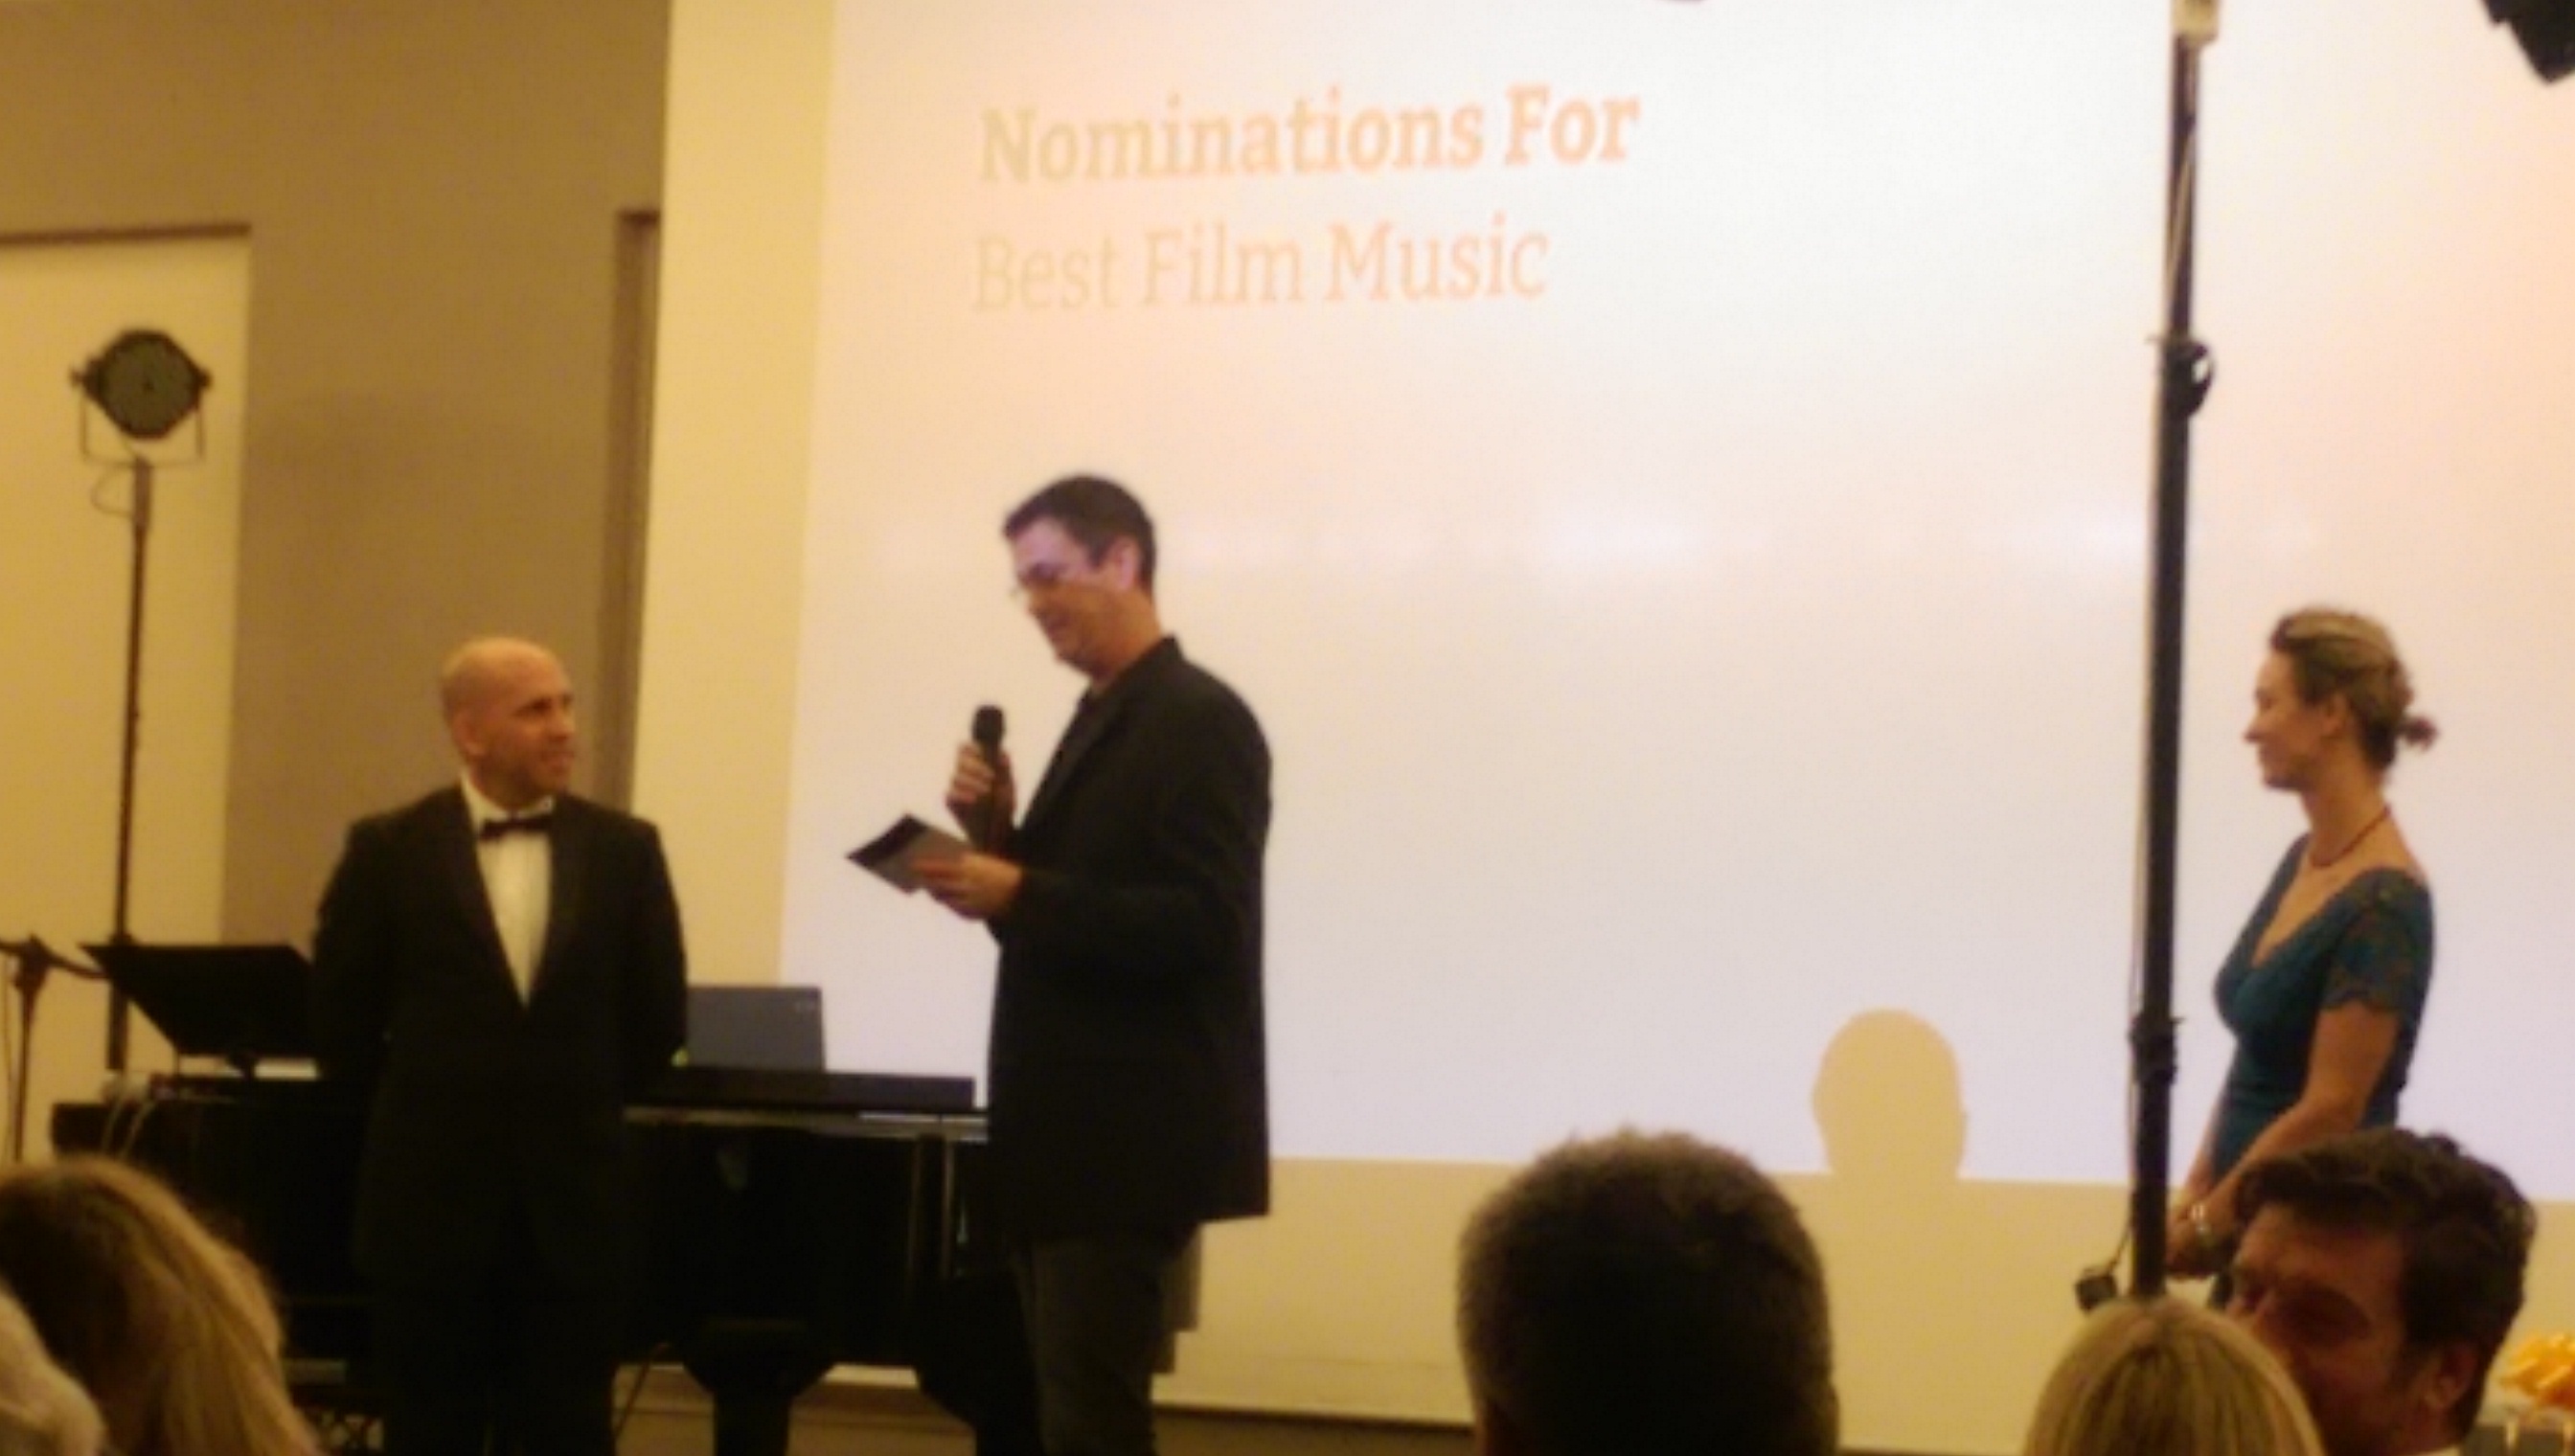 Presenting Best Film Music award at Marbella International Film Festival